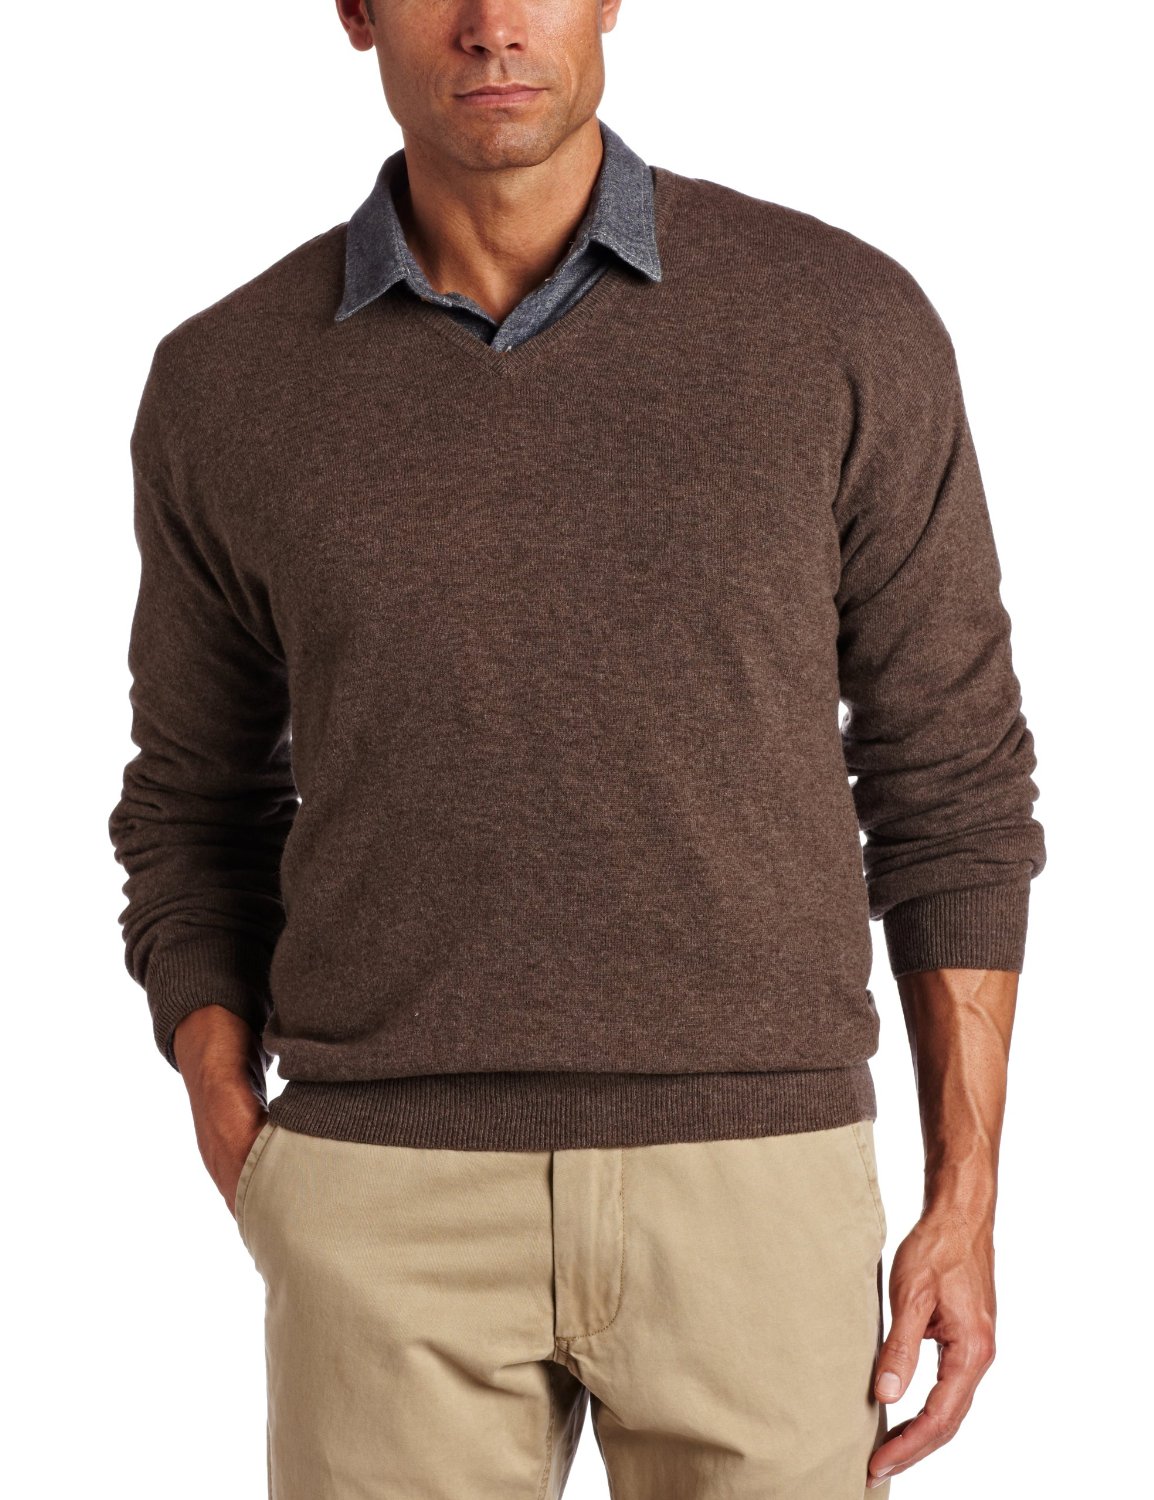 Pendleton Men's Classic Fit V-neck Sweater  40.64